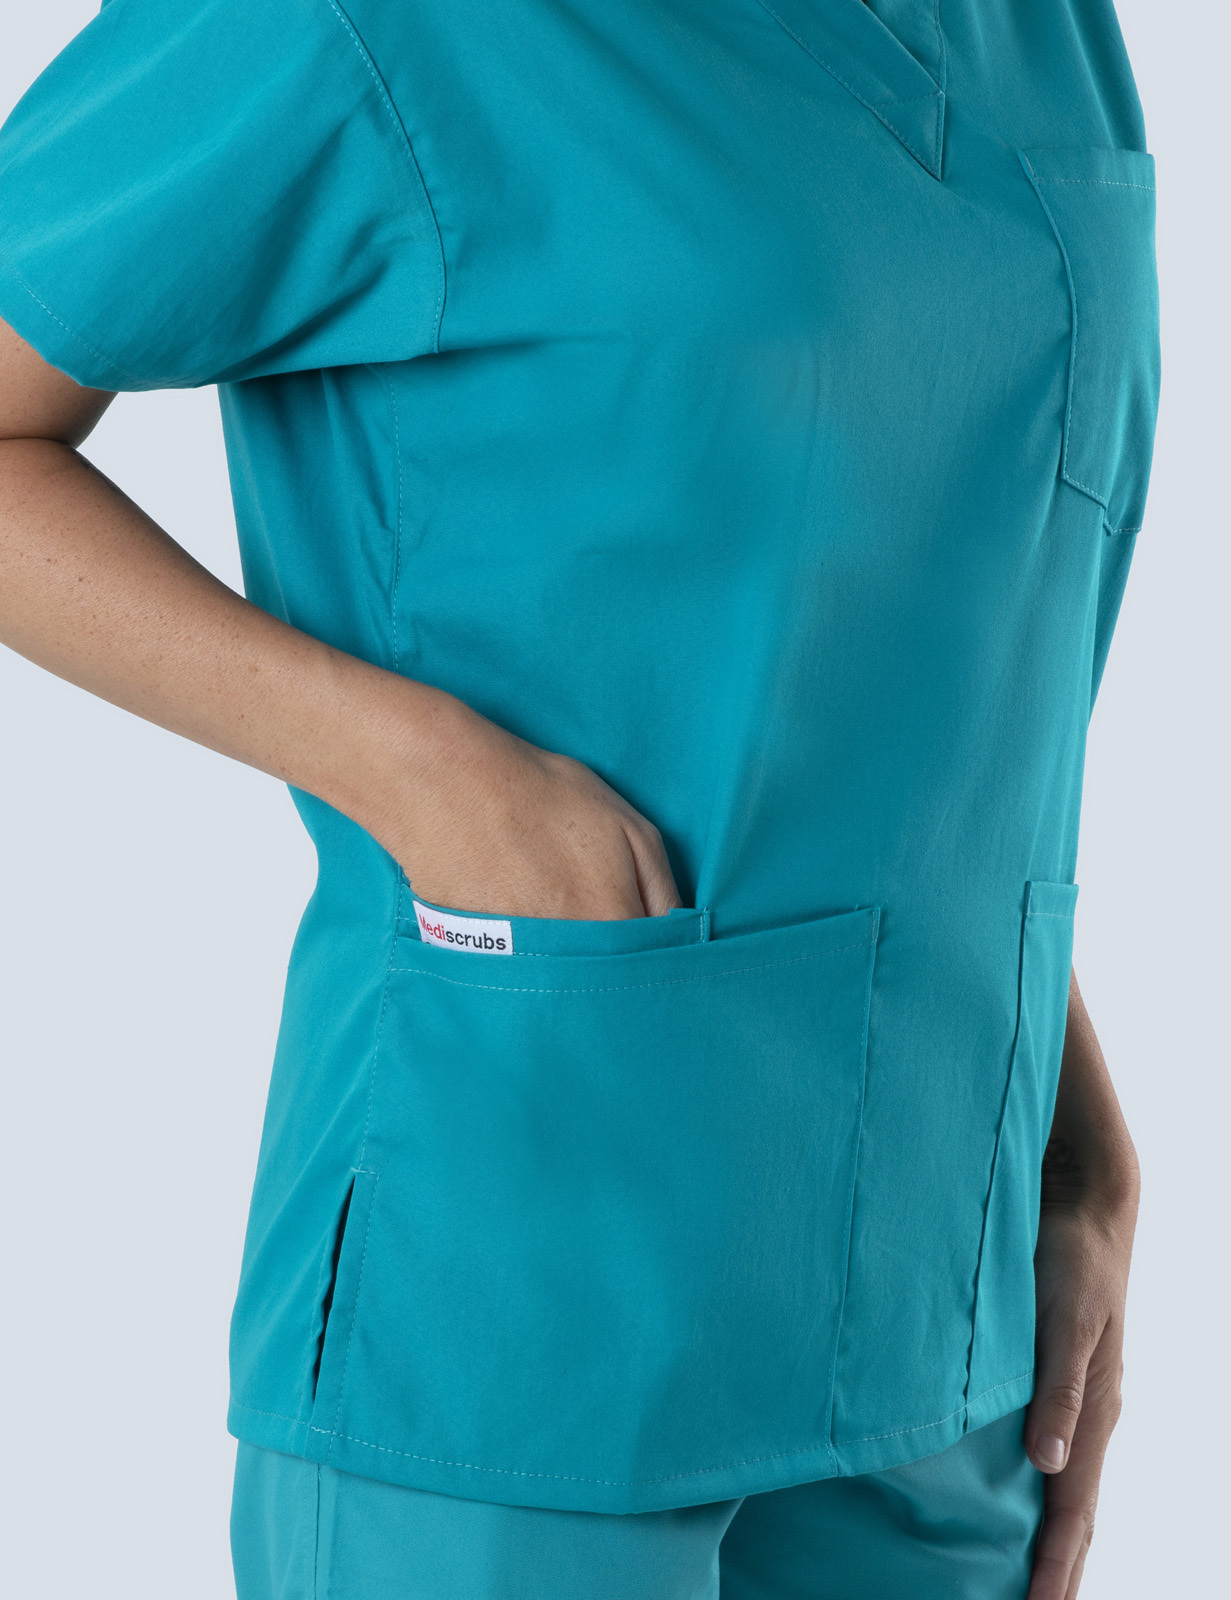 Caloundra Hospital - AIN (4 Pocket Scrub Top and Cargo Pants in Teal incl Logos)